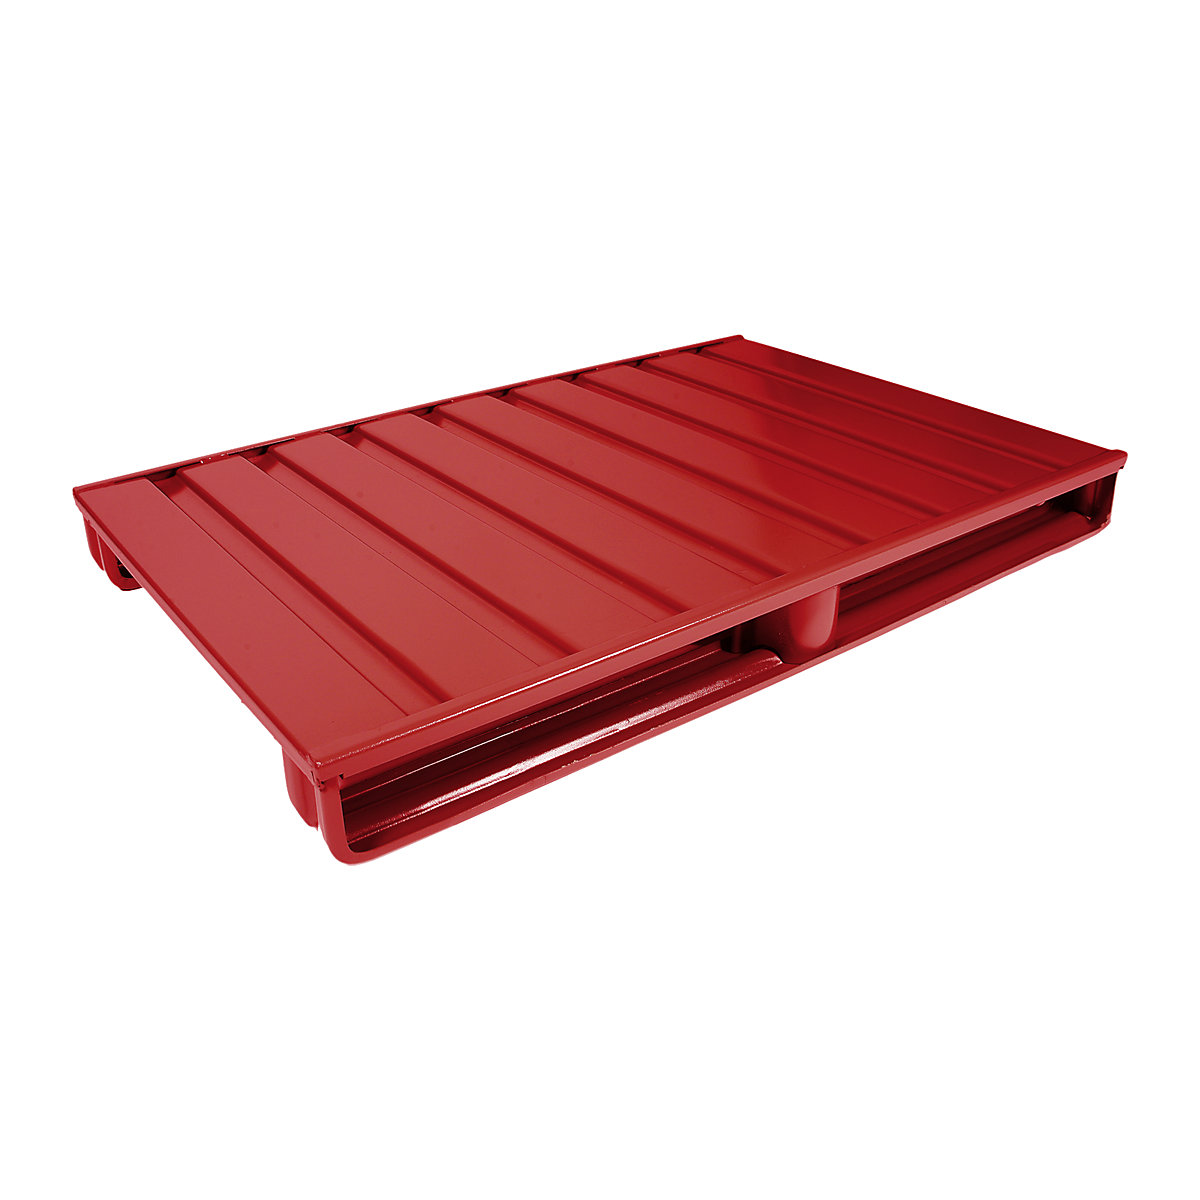 Ploska jeklena paleta – Heson, DxŠ 1200 x 1000 mm, nosilnost 1500 kg, ognjeno rdeče barve, od 10 kosov-4